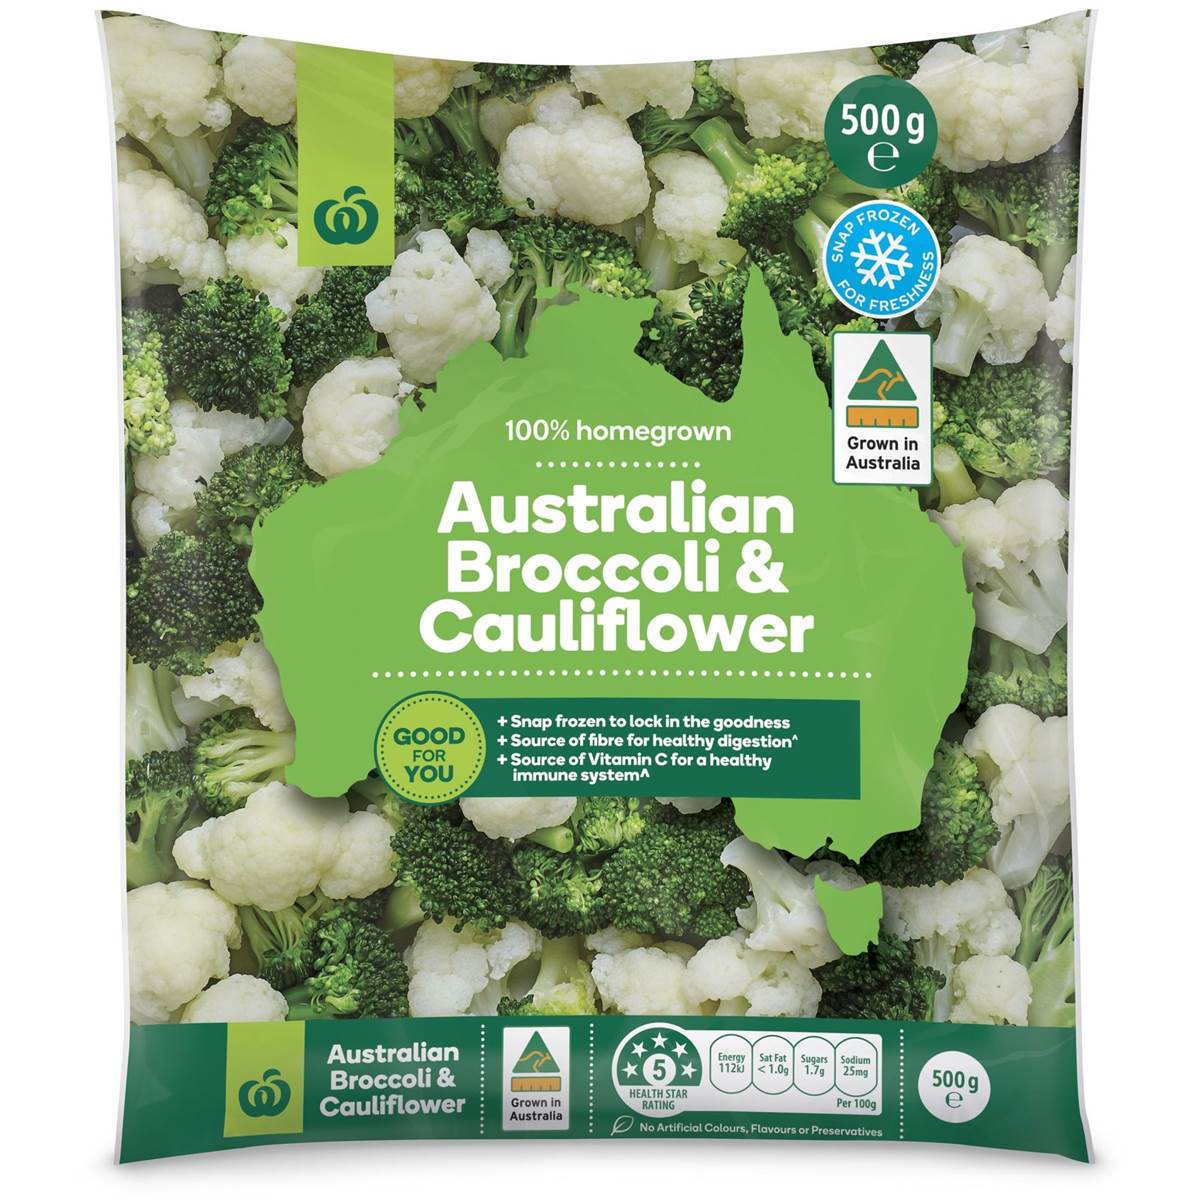 Calories in Woolworths Broccoli & Cauliflower